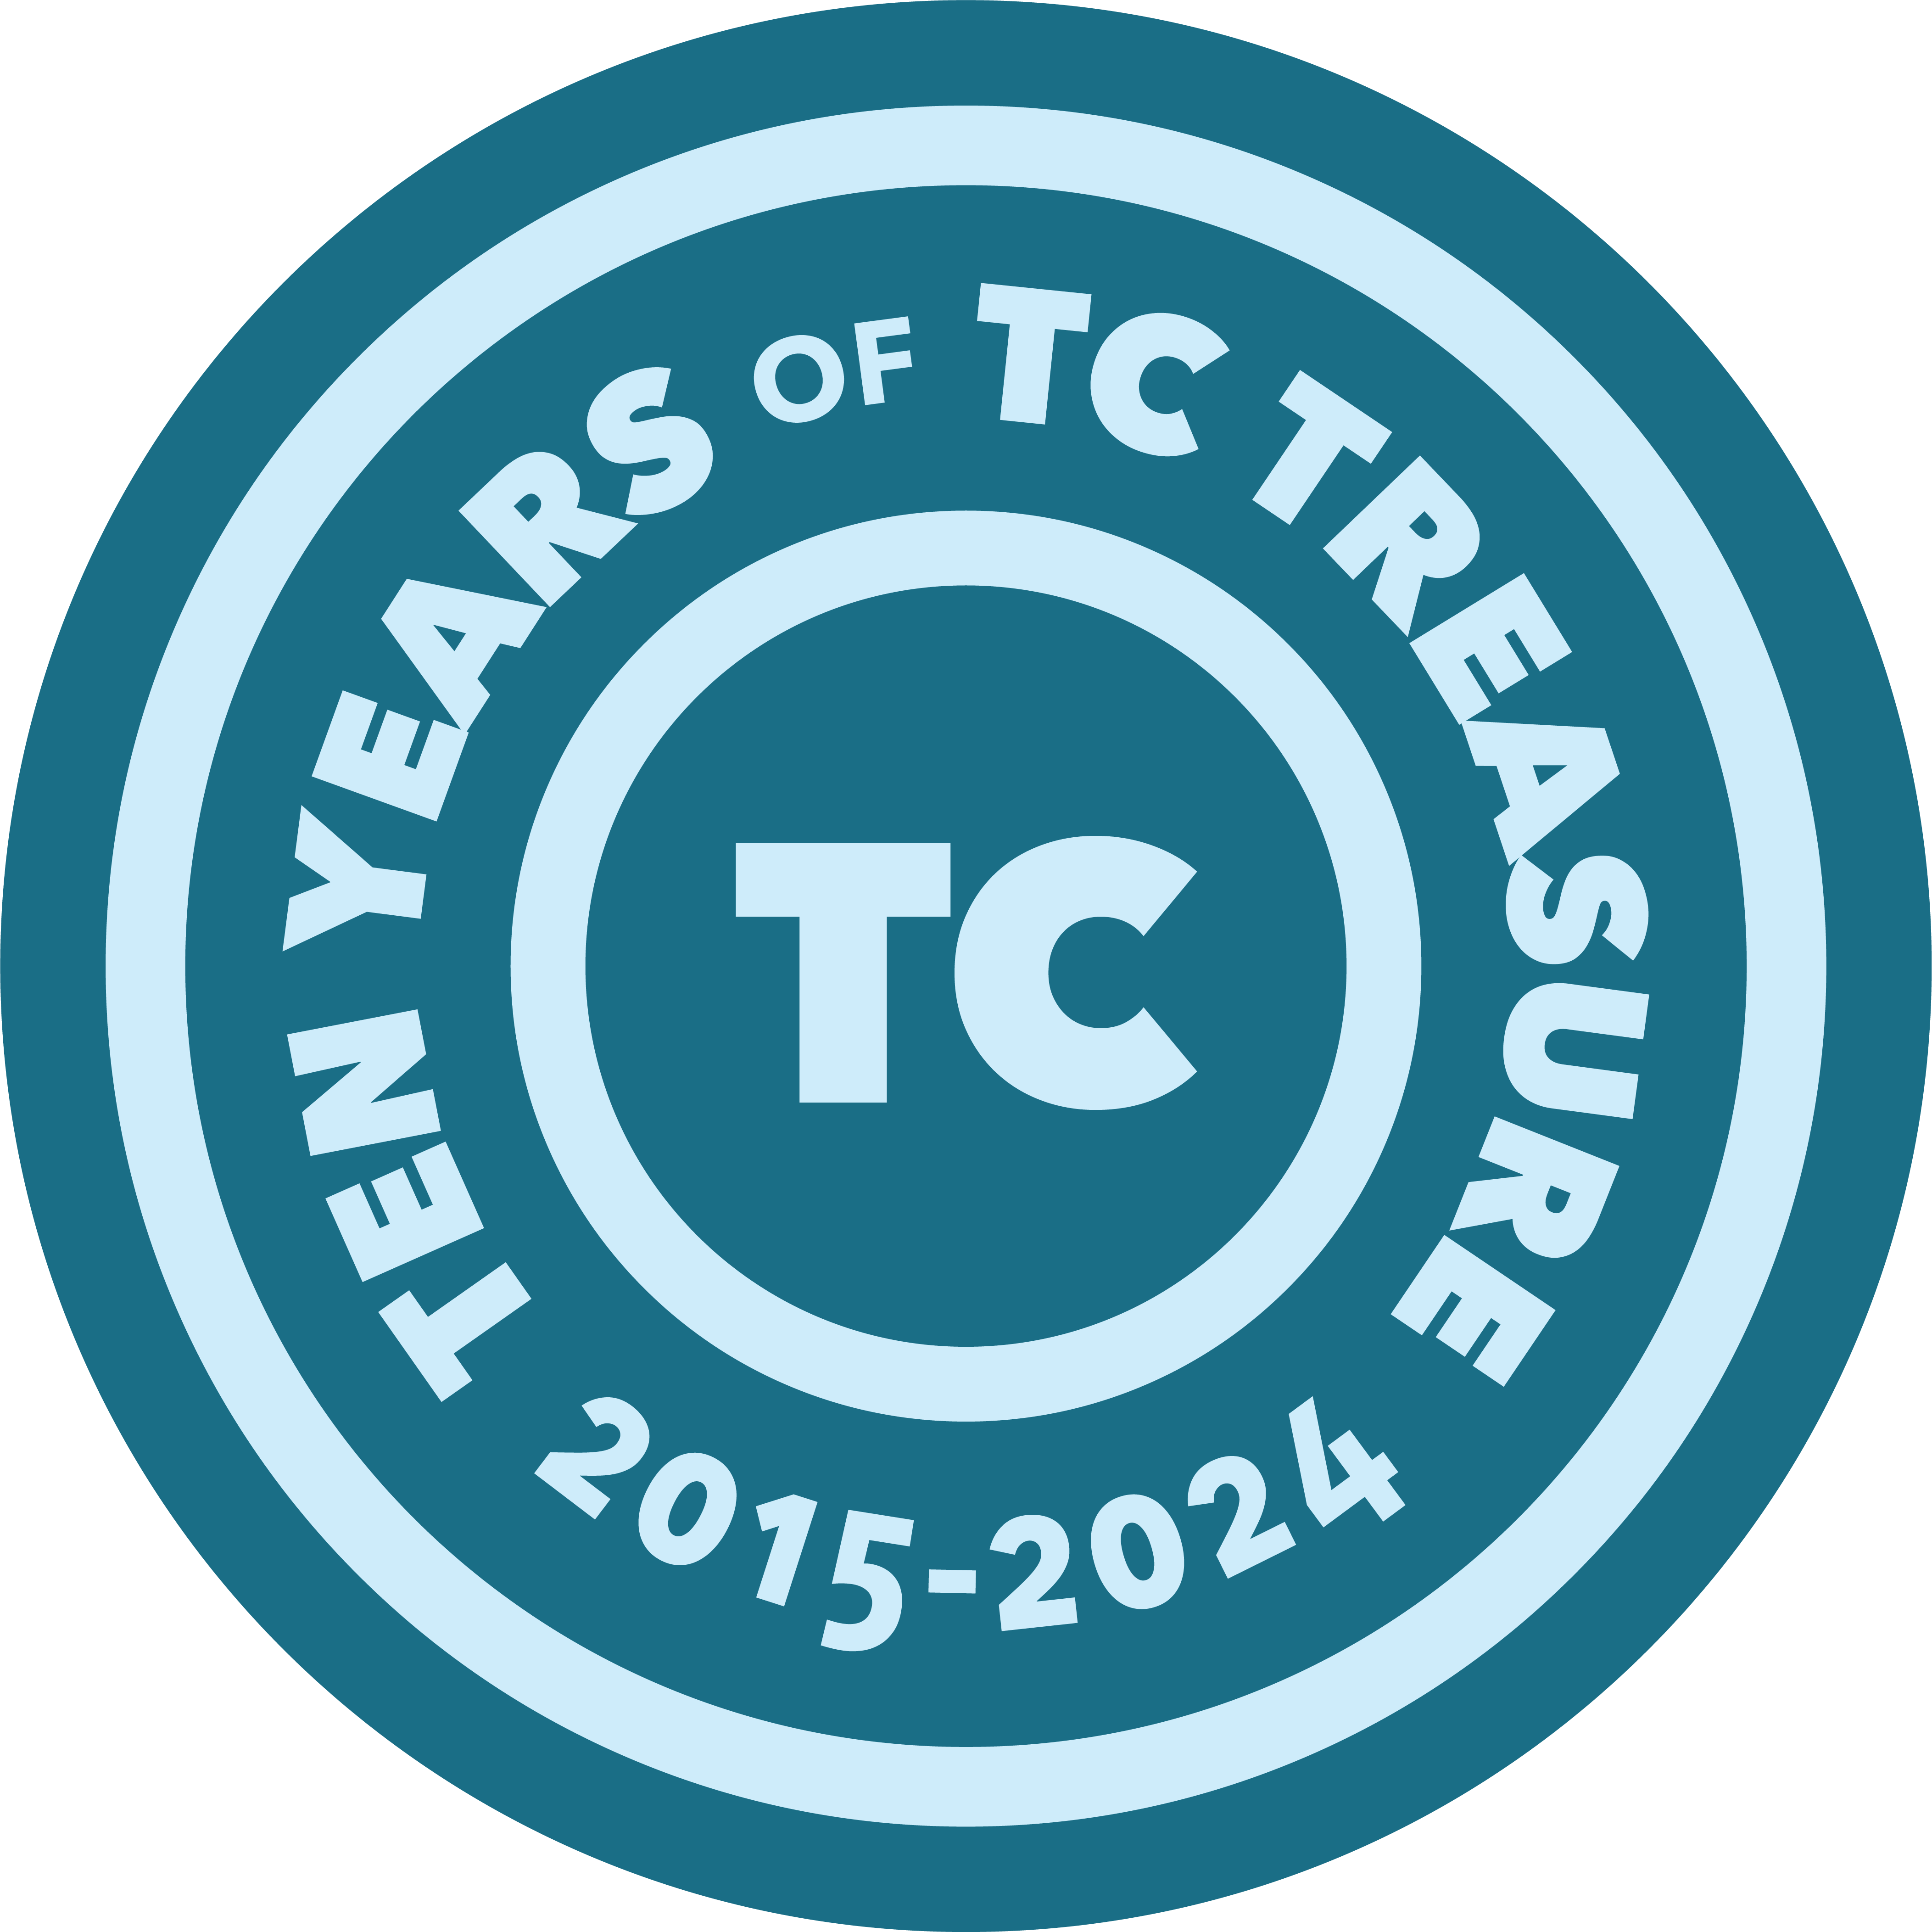 TEN YEARS OF TC TREASURE — 2015-2024